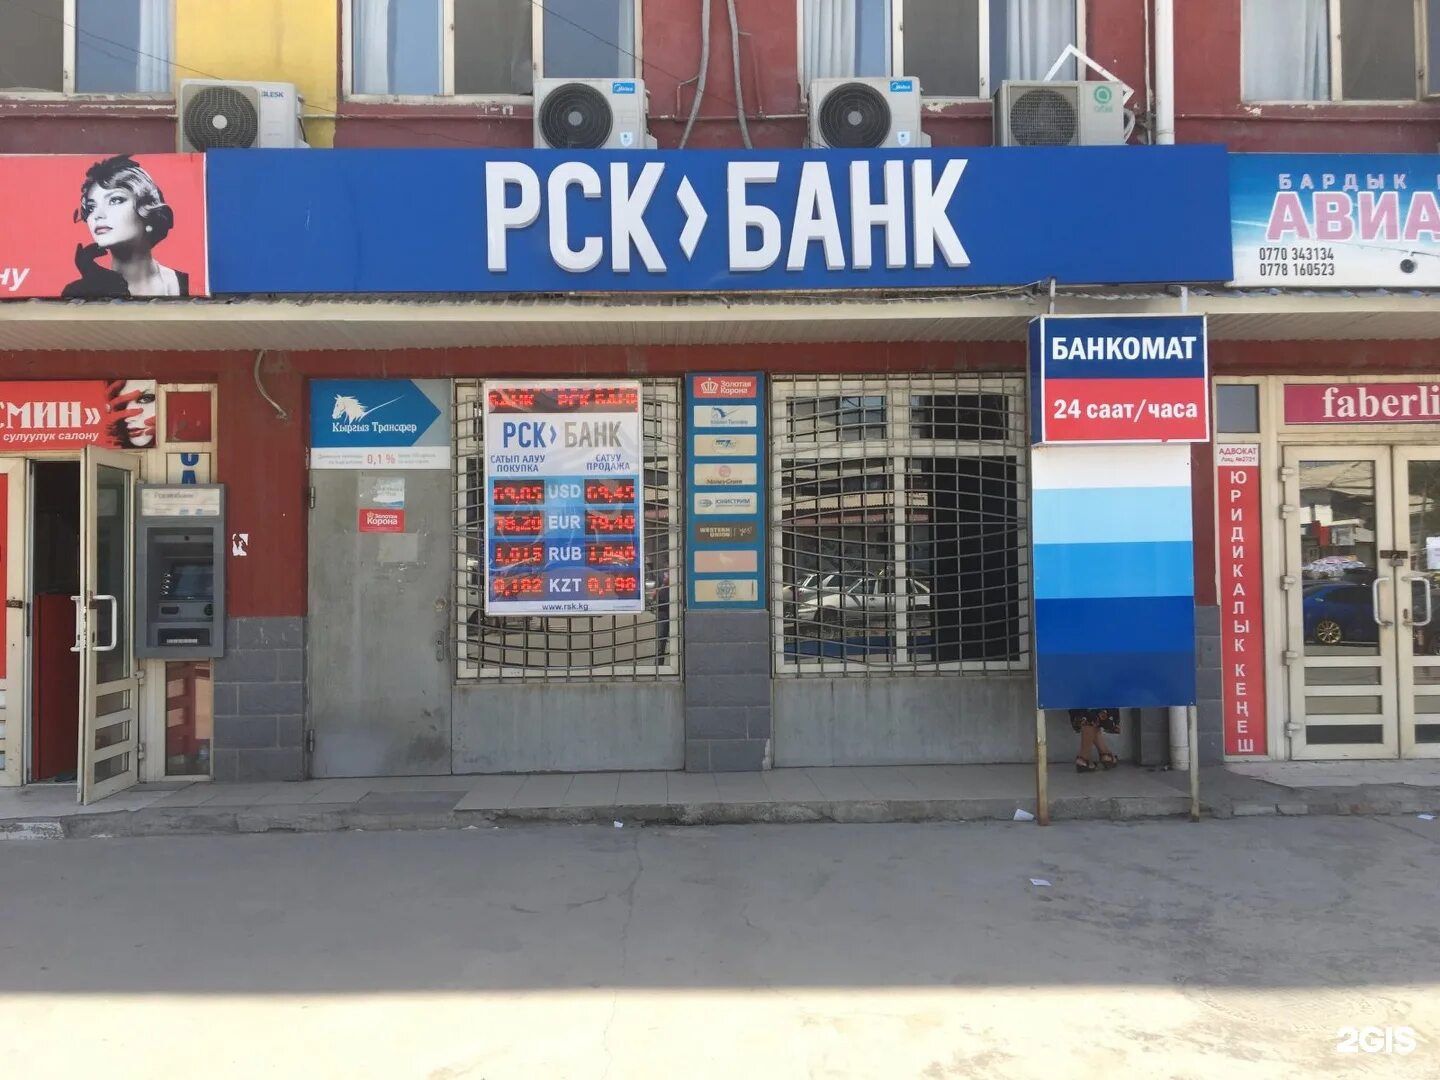 Bank kyrgyzstan. РСК банк Ош. РСК банк Ош базар. Банк Бишкек. РСК банк Бишкек.